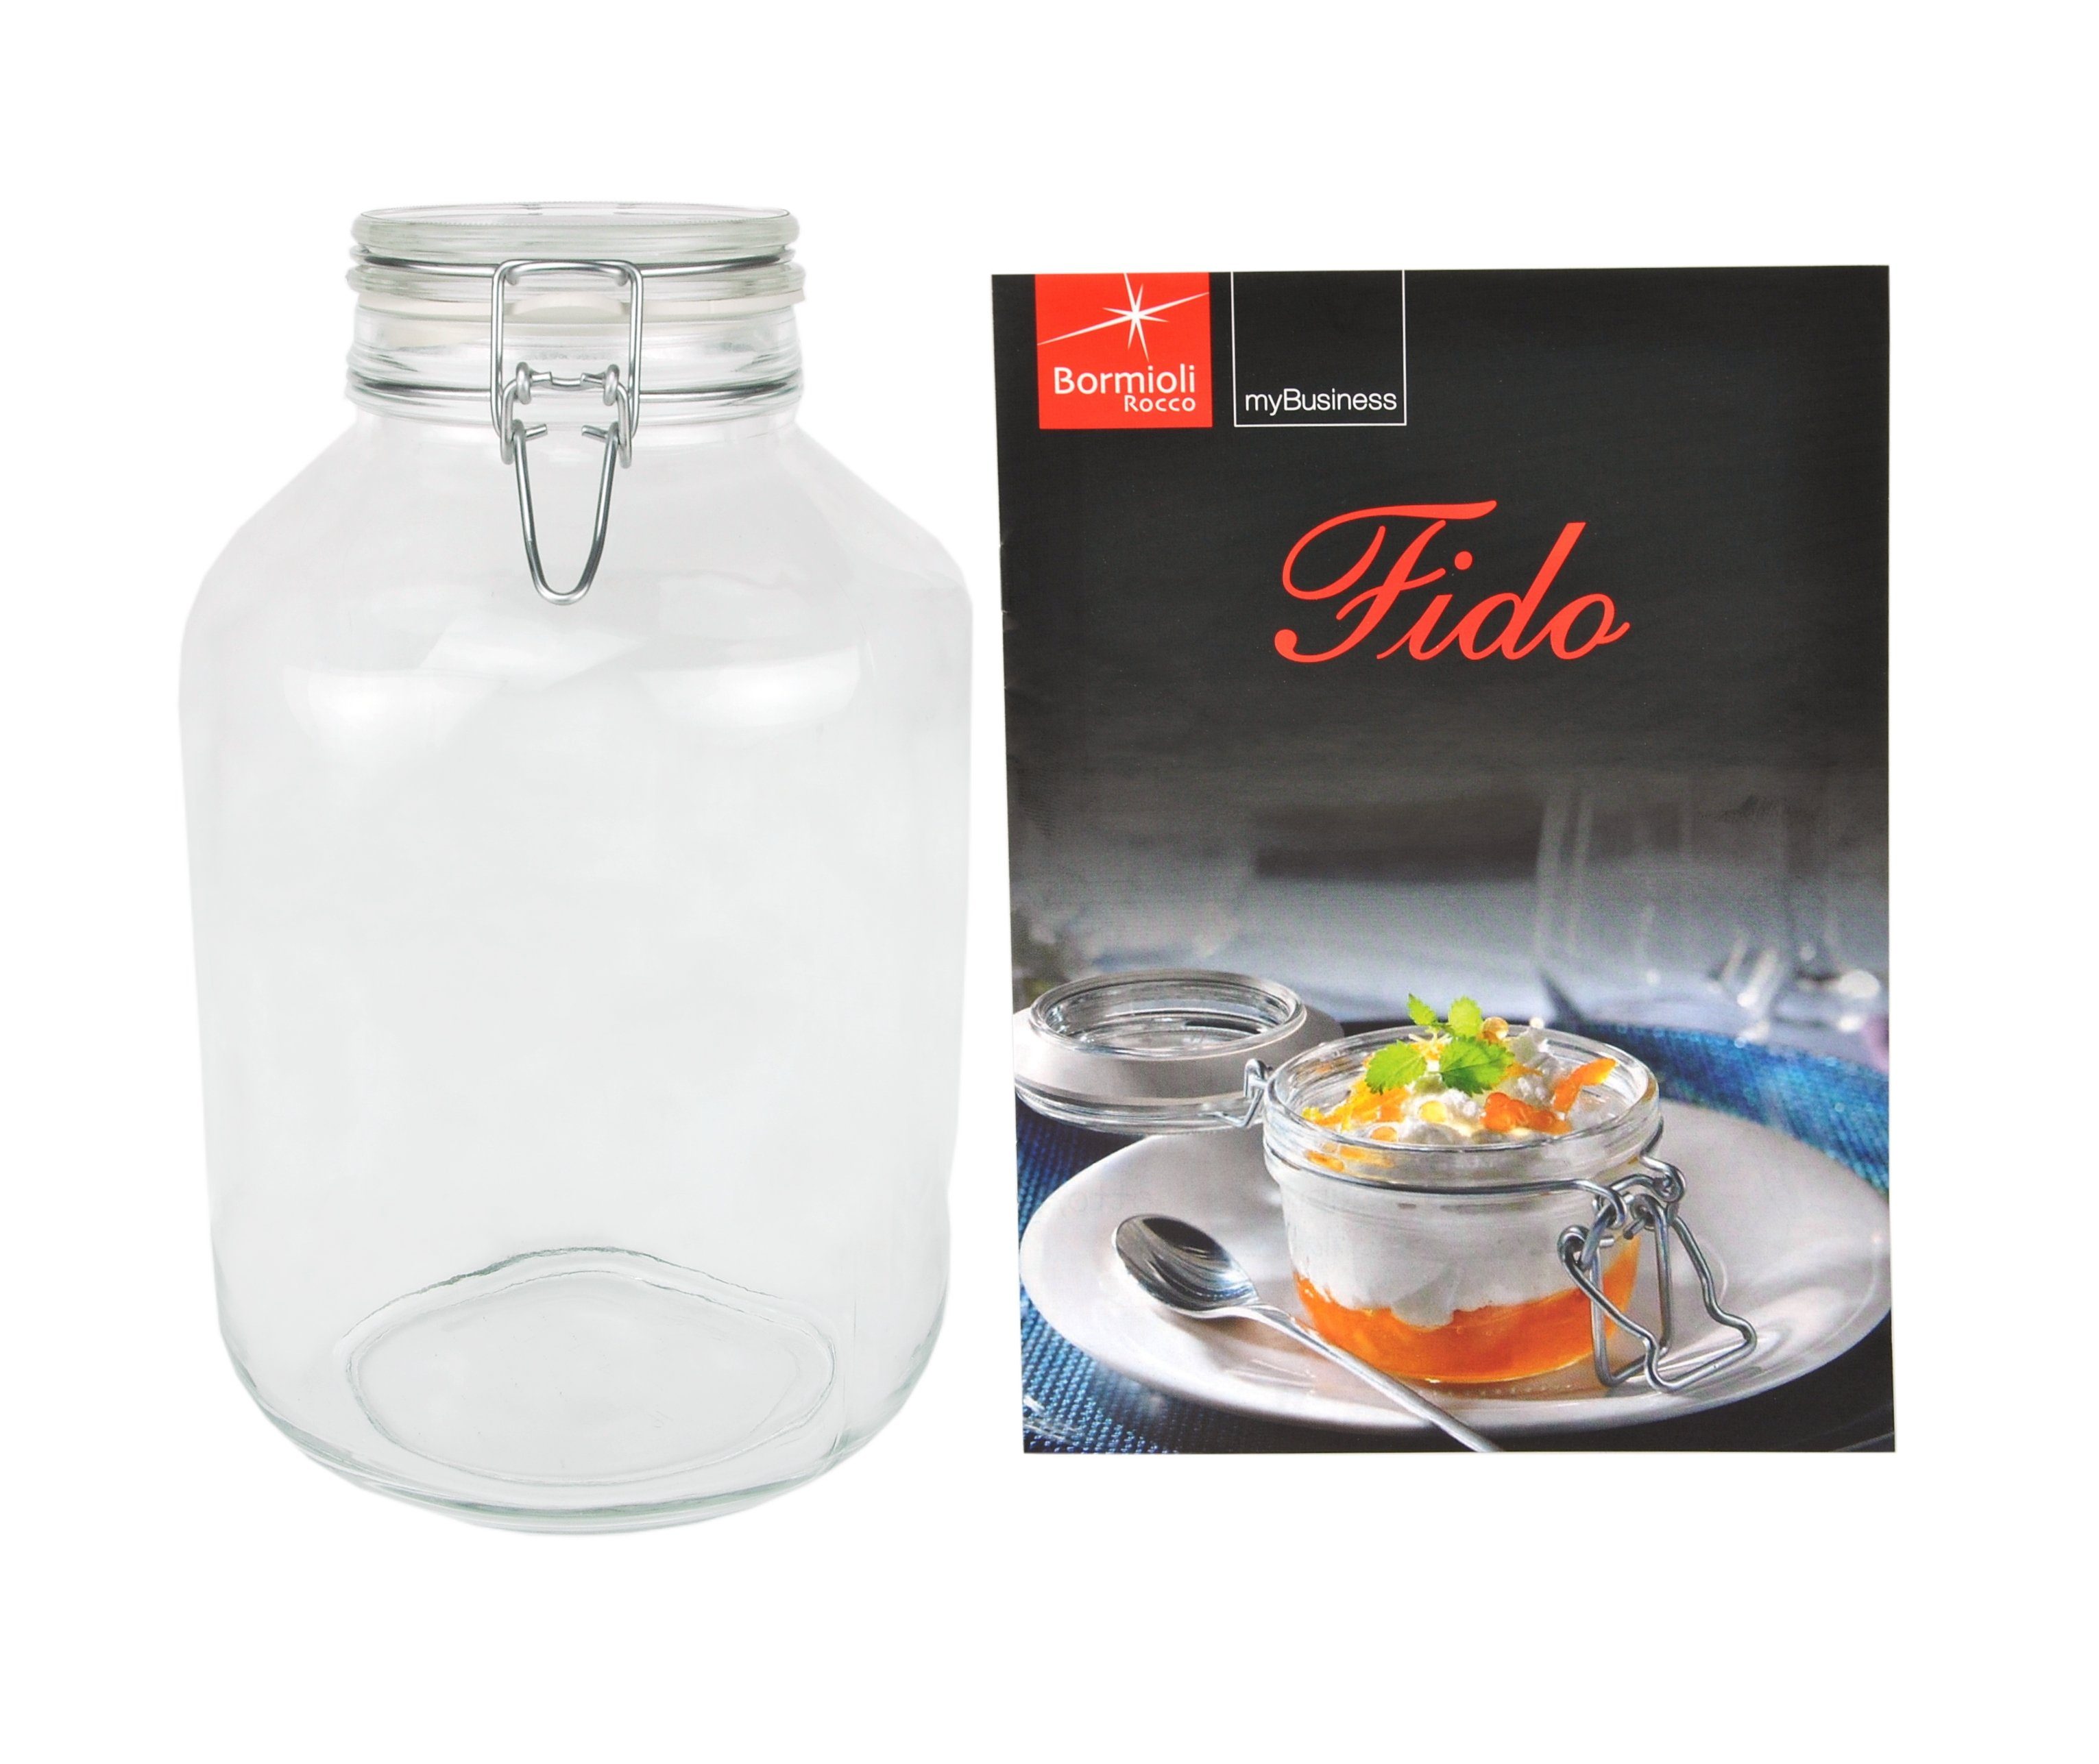 MamboCat Vorratsglas Einmachglas Bügelverschluss Original Fido 5,0L incl. Rezeptheft, Glas